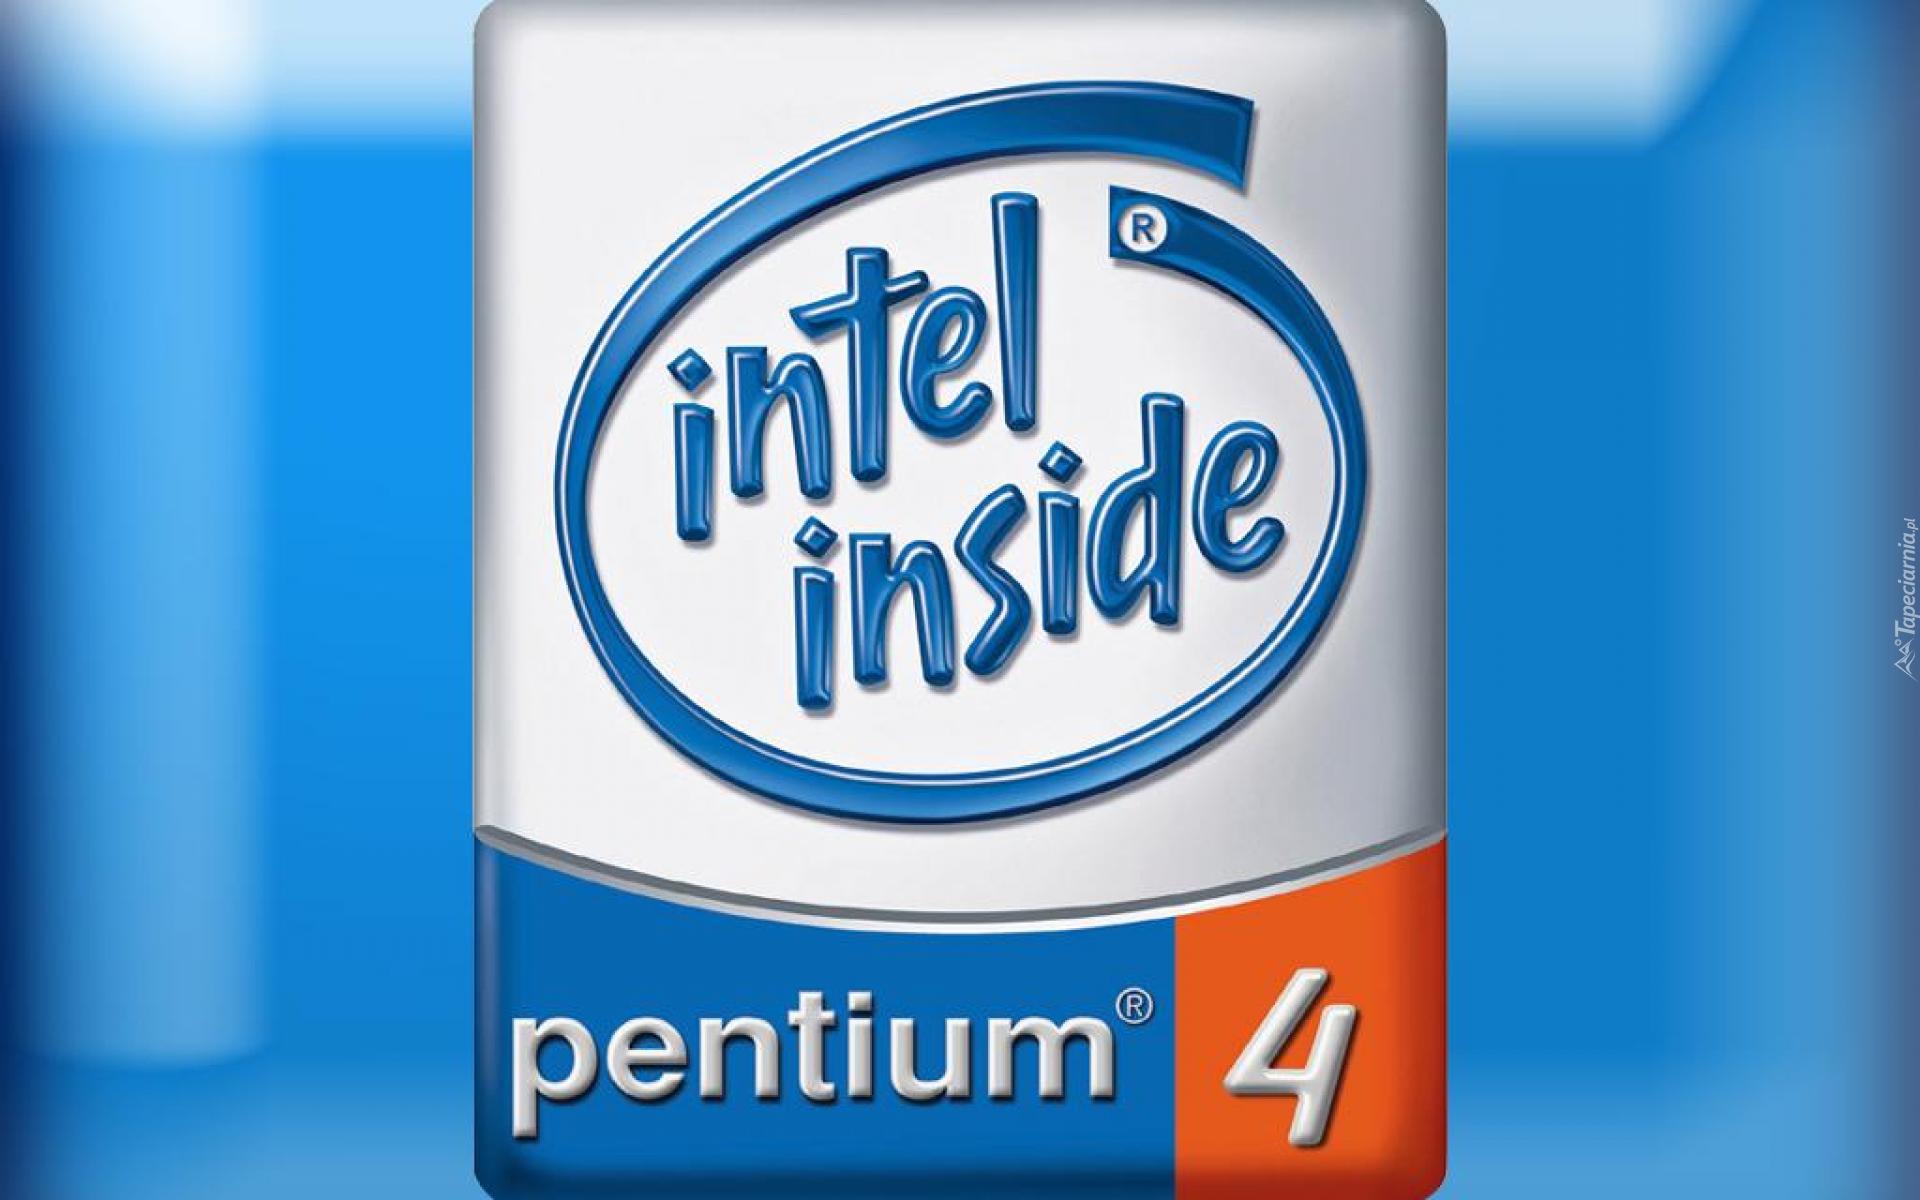 Intel inside, Prntium 4